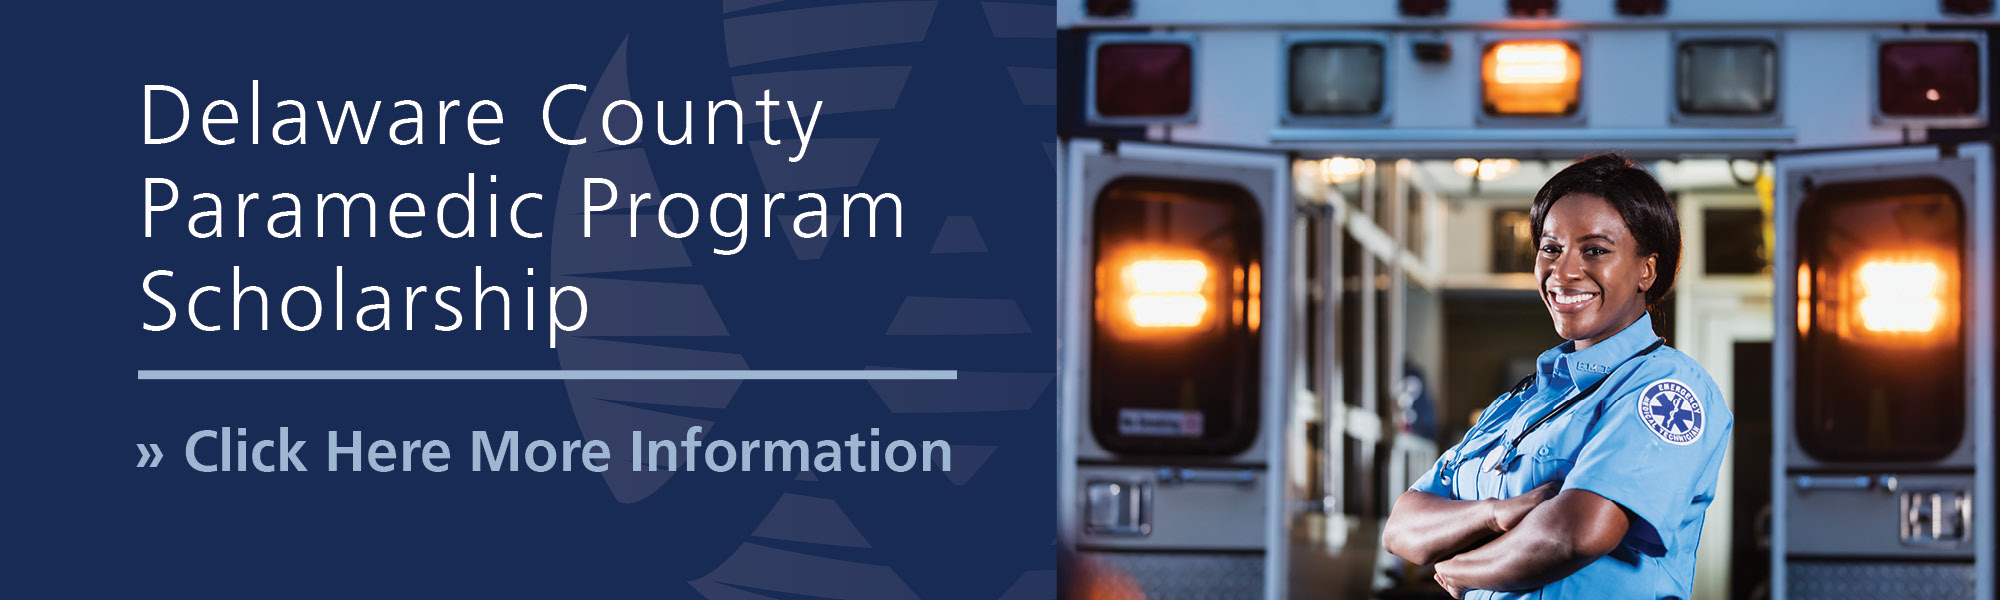 Delaware County Paramedic Program Scholarship Information